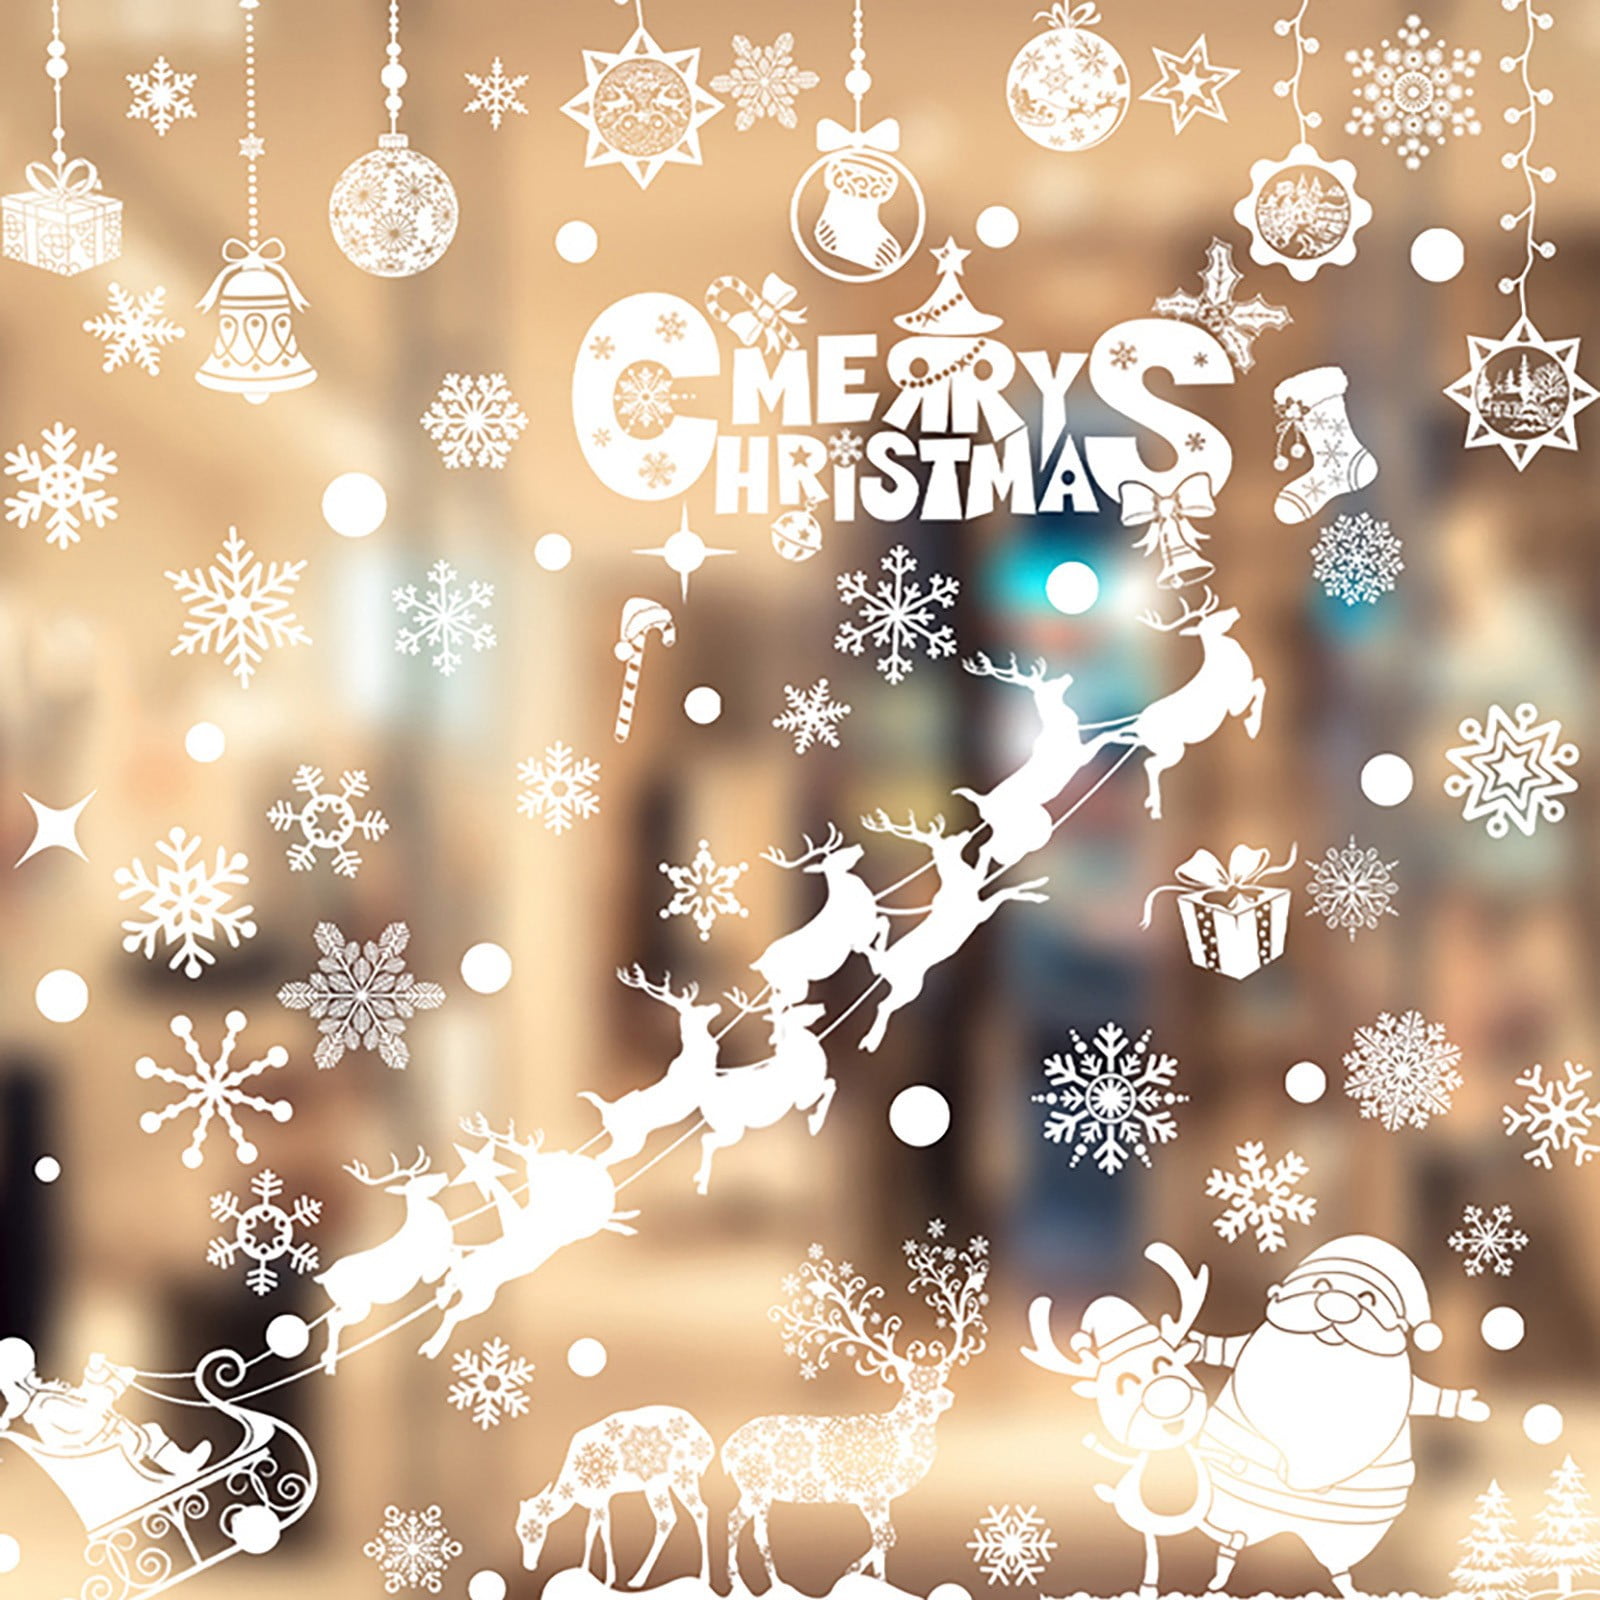 Christmas GEL Sticker Window Clings ~ Snowflakes 15 ct w 